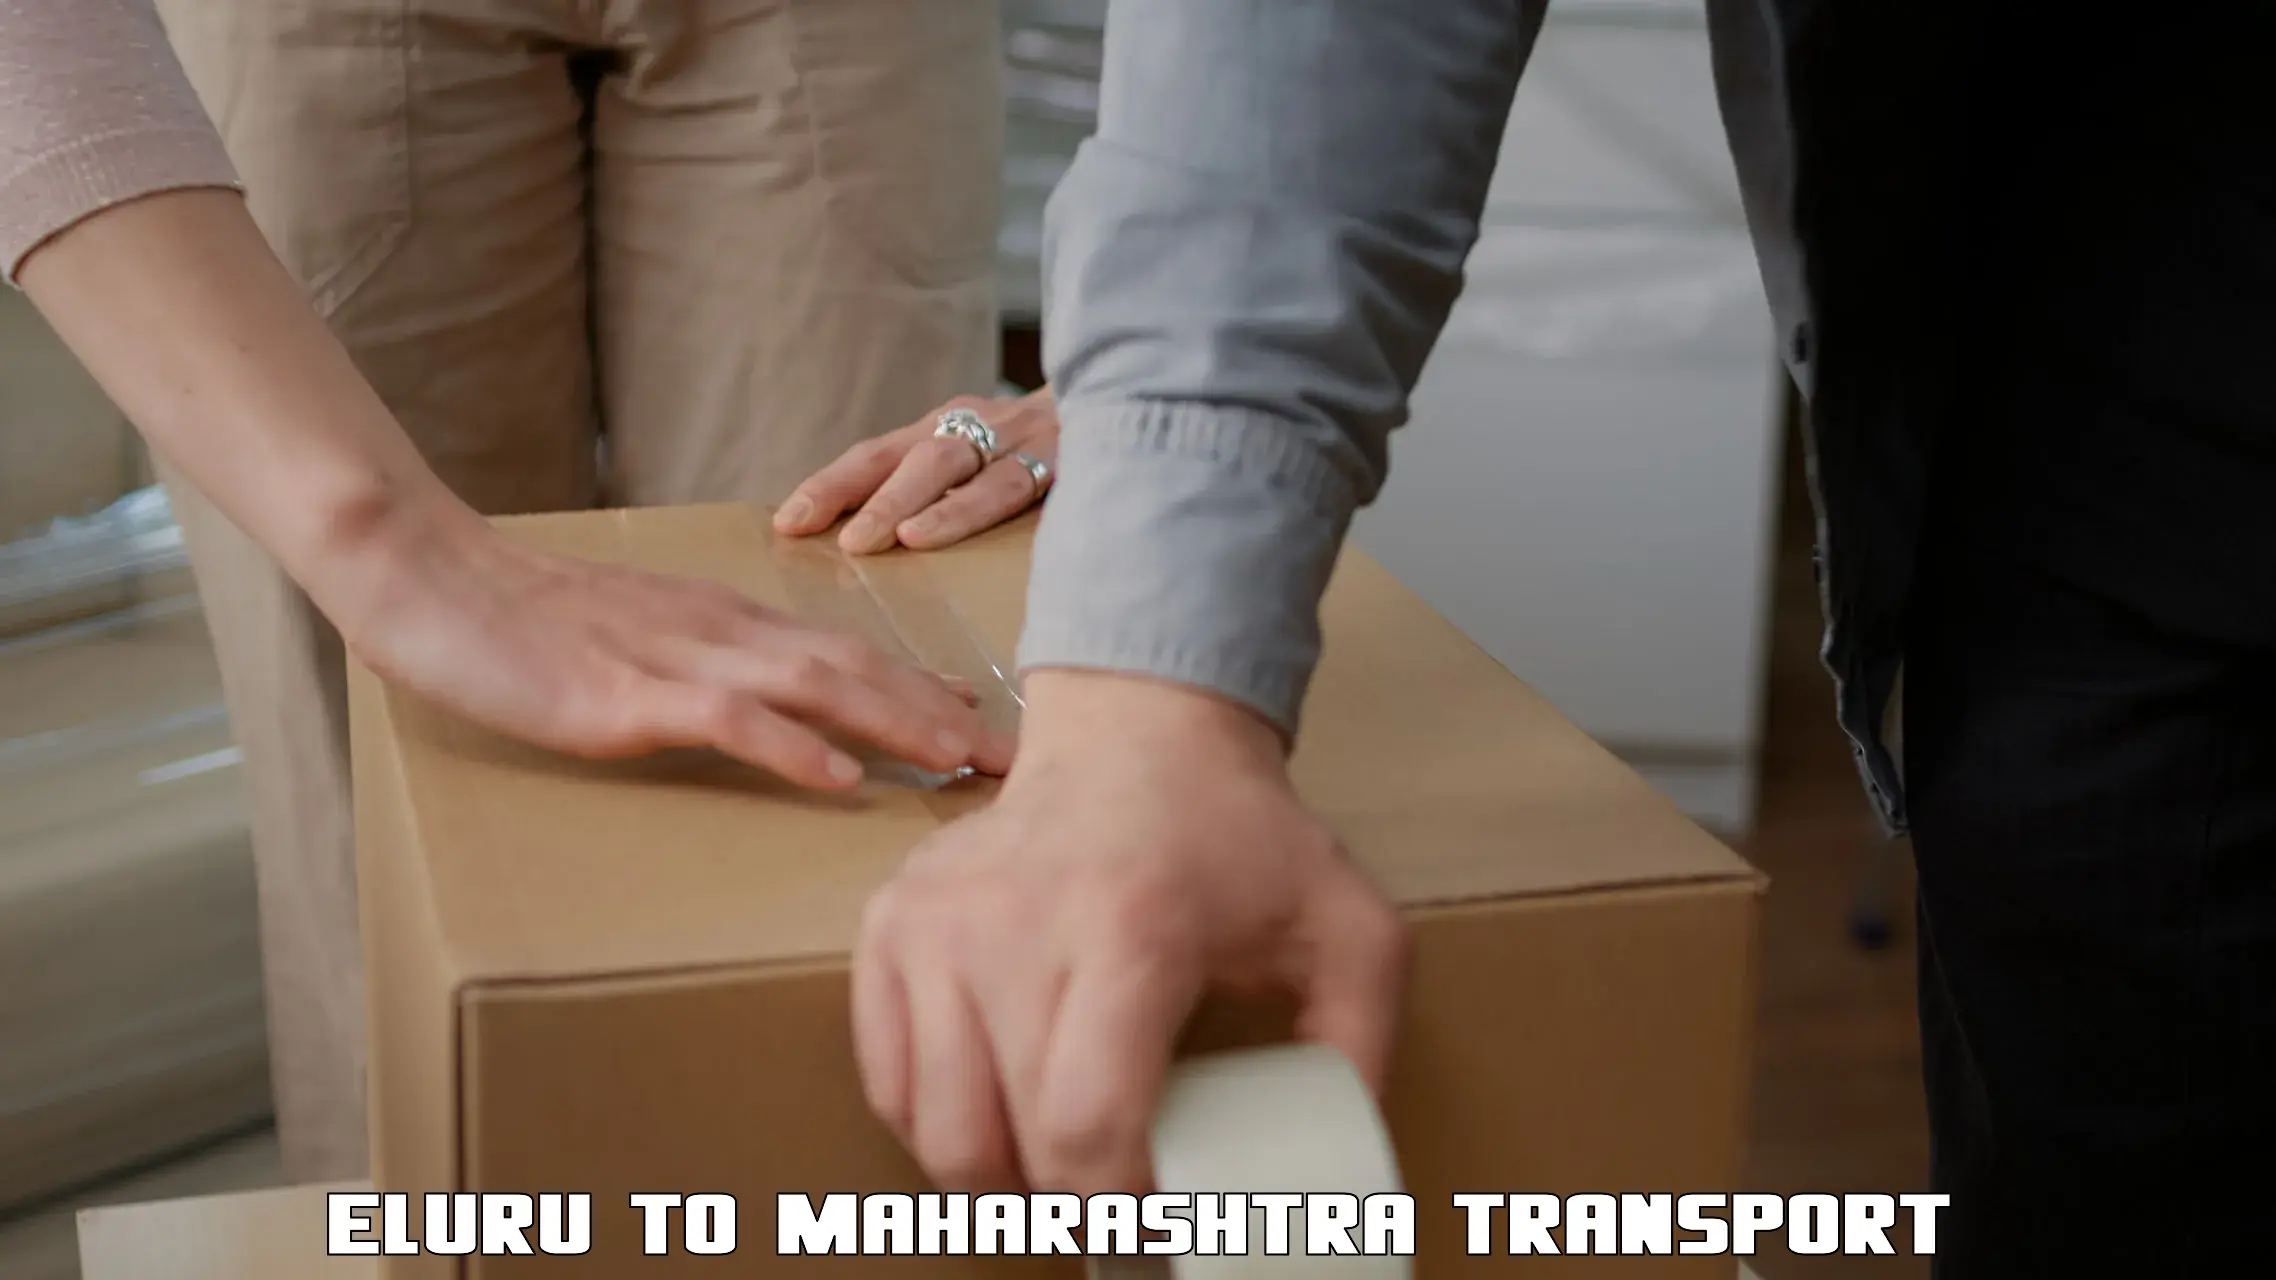 Pick up transport service Eluru to Raigarh Maharashtra